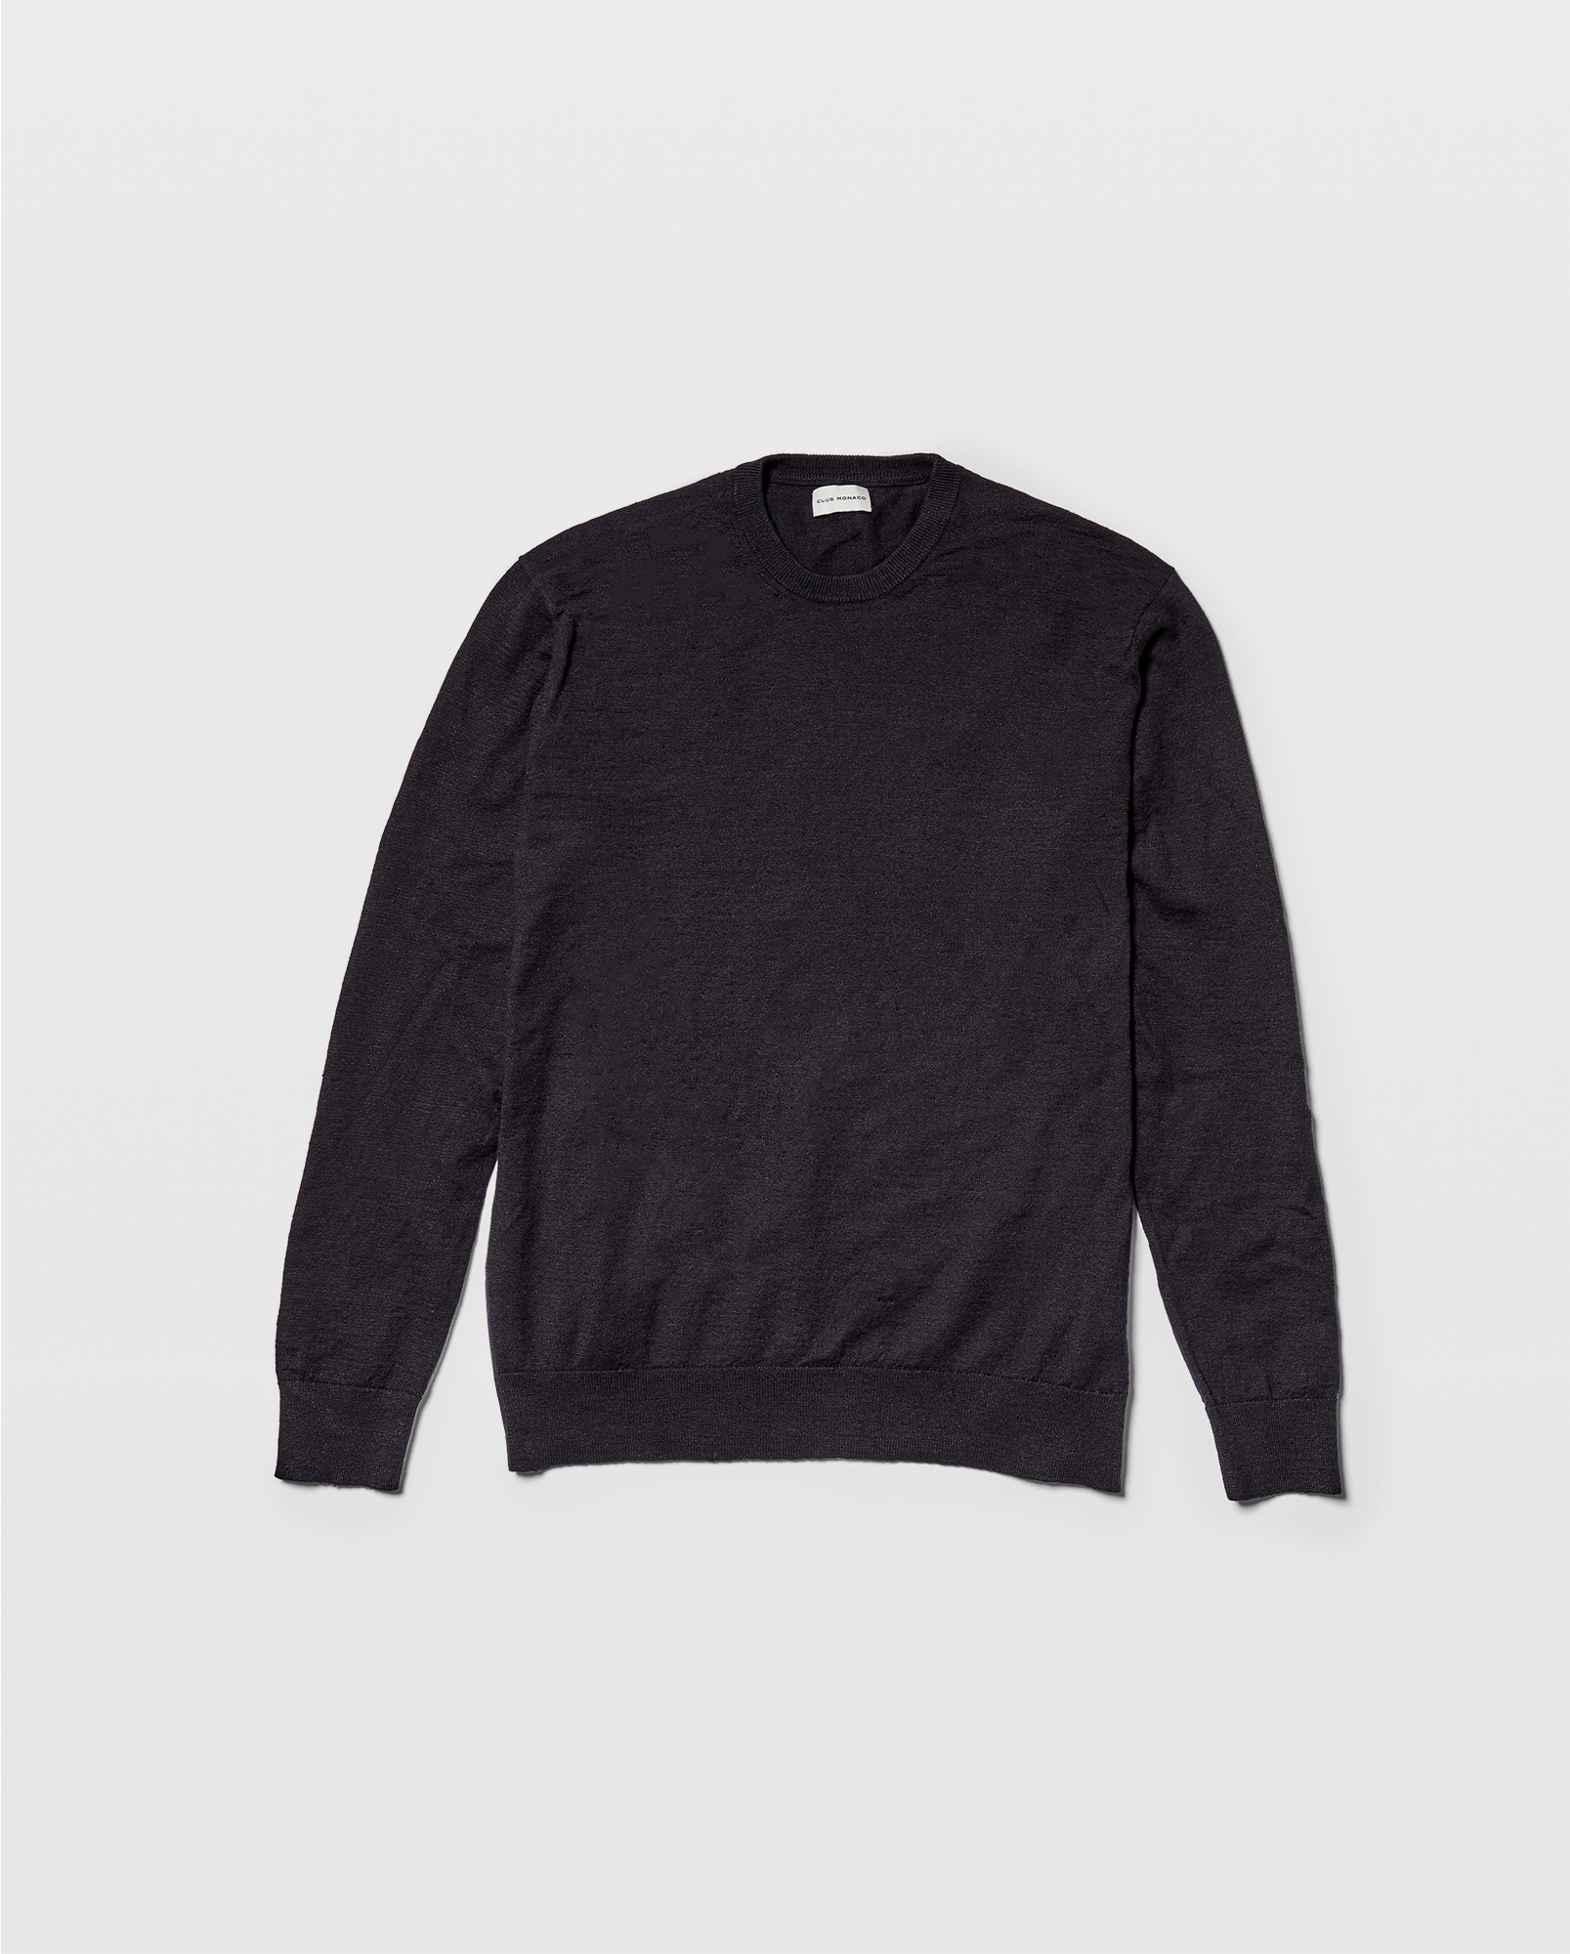 Club Monaco Black Linen Crew Sweater for Men - Lyst